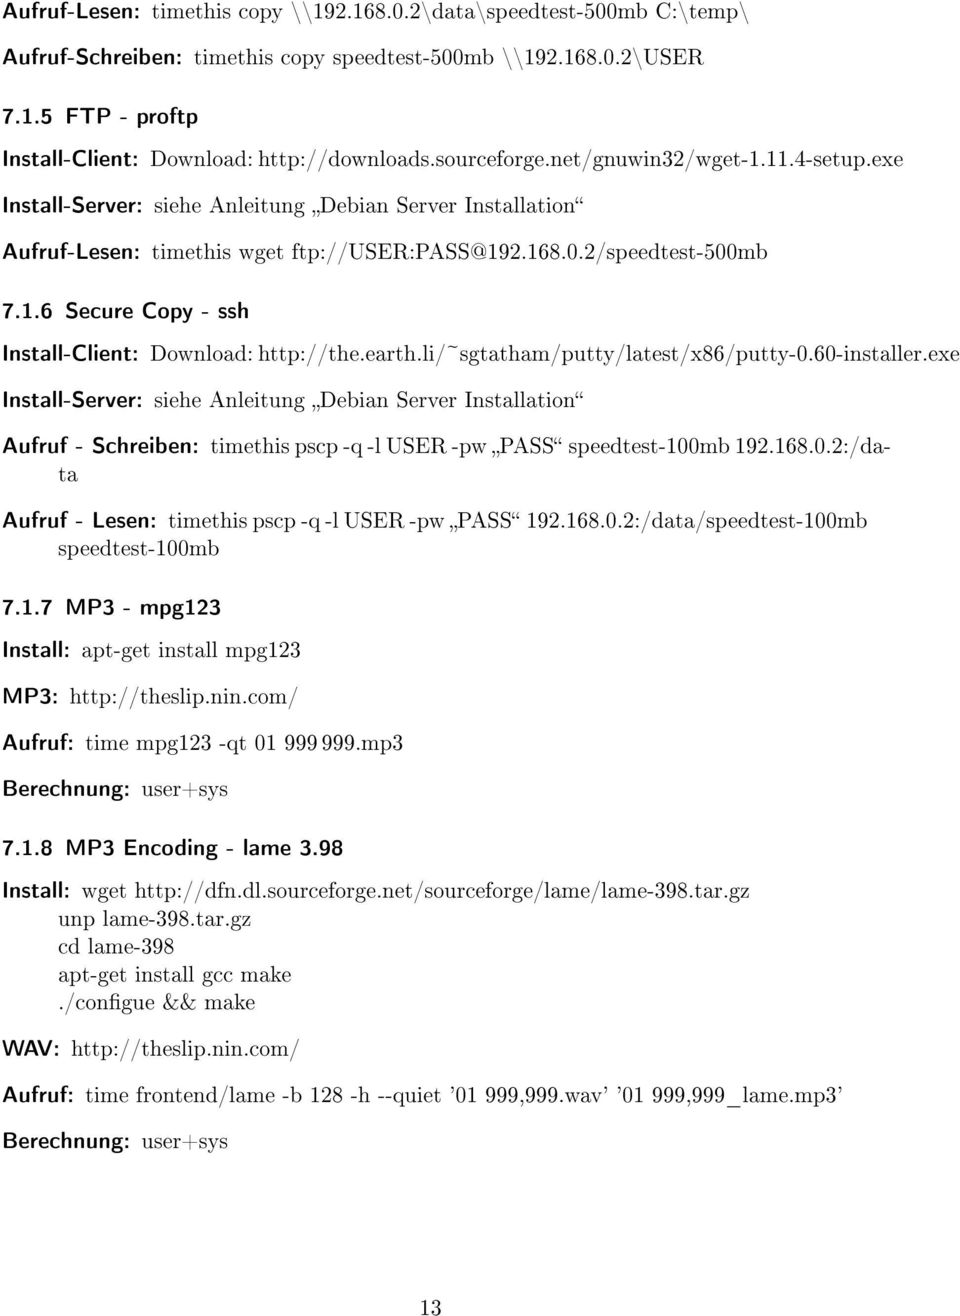 earth.li/~sgtatham/putty/latest/x86/putty-0.60-installer.exe Install-Server: siehe Anleitung Debian Server Installation Aufruf - Schreiben: timethis pscp -q -l USER -pw PASS speedtest-100mb 192.168.0.2:/data Aufruf - Lesen: timethis pscp -q -l USER -pw PASS 192.